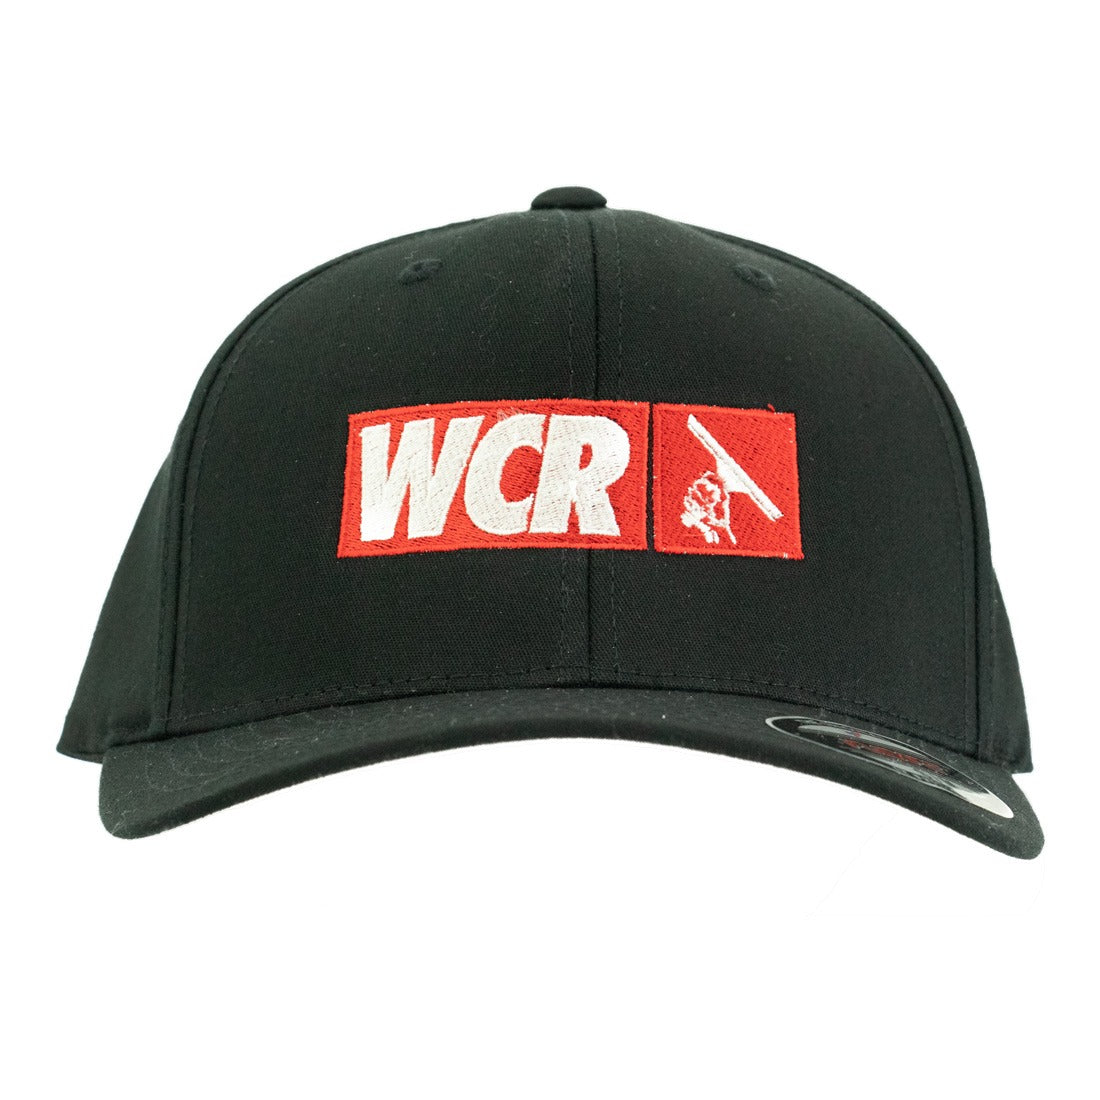 WCR Baseball Cap Black - L/XL Front View